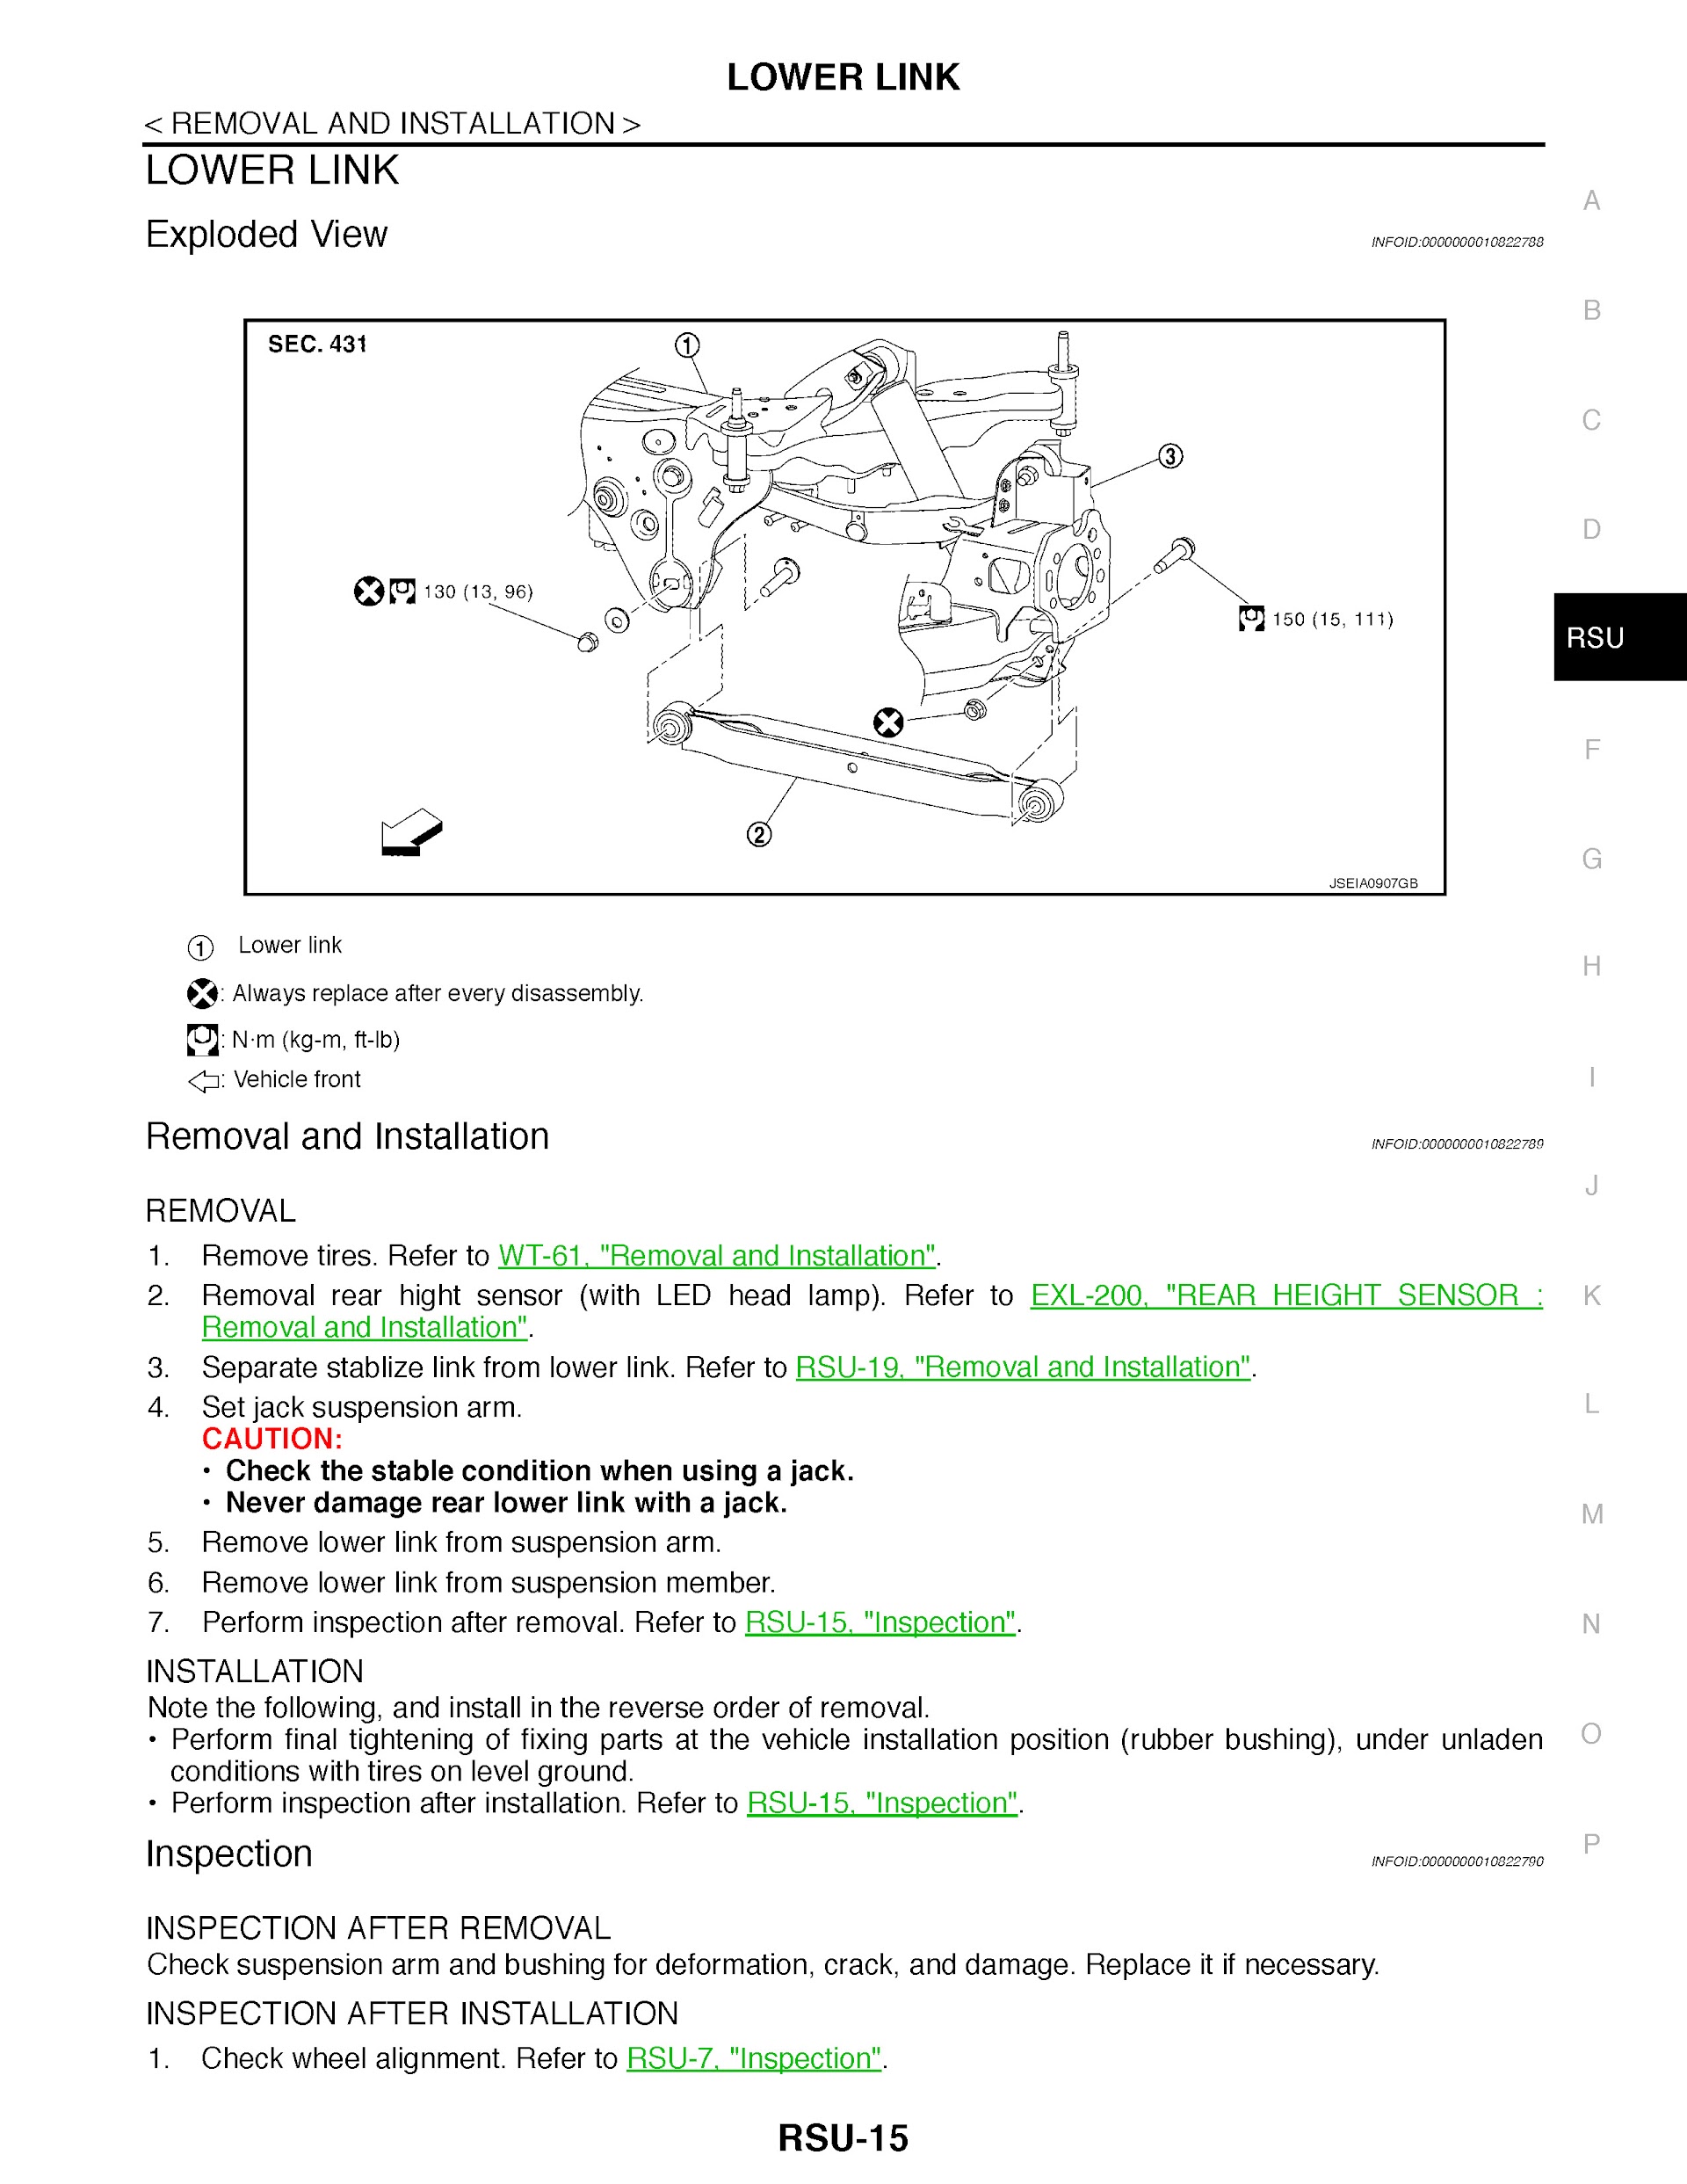 2020 Nissan X-Trail Repair Manual, Power Link